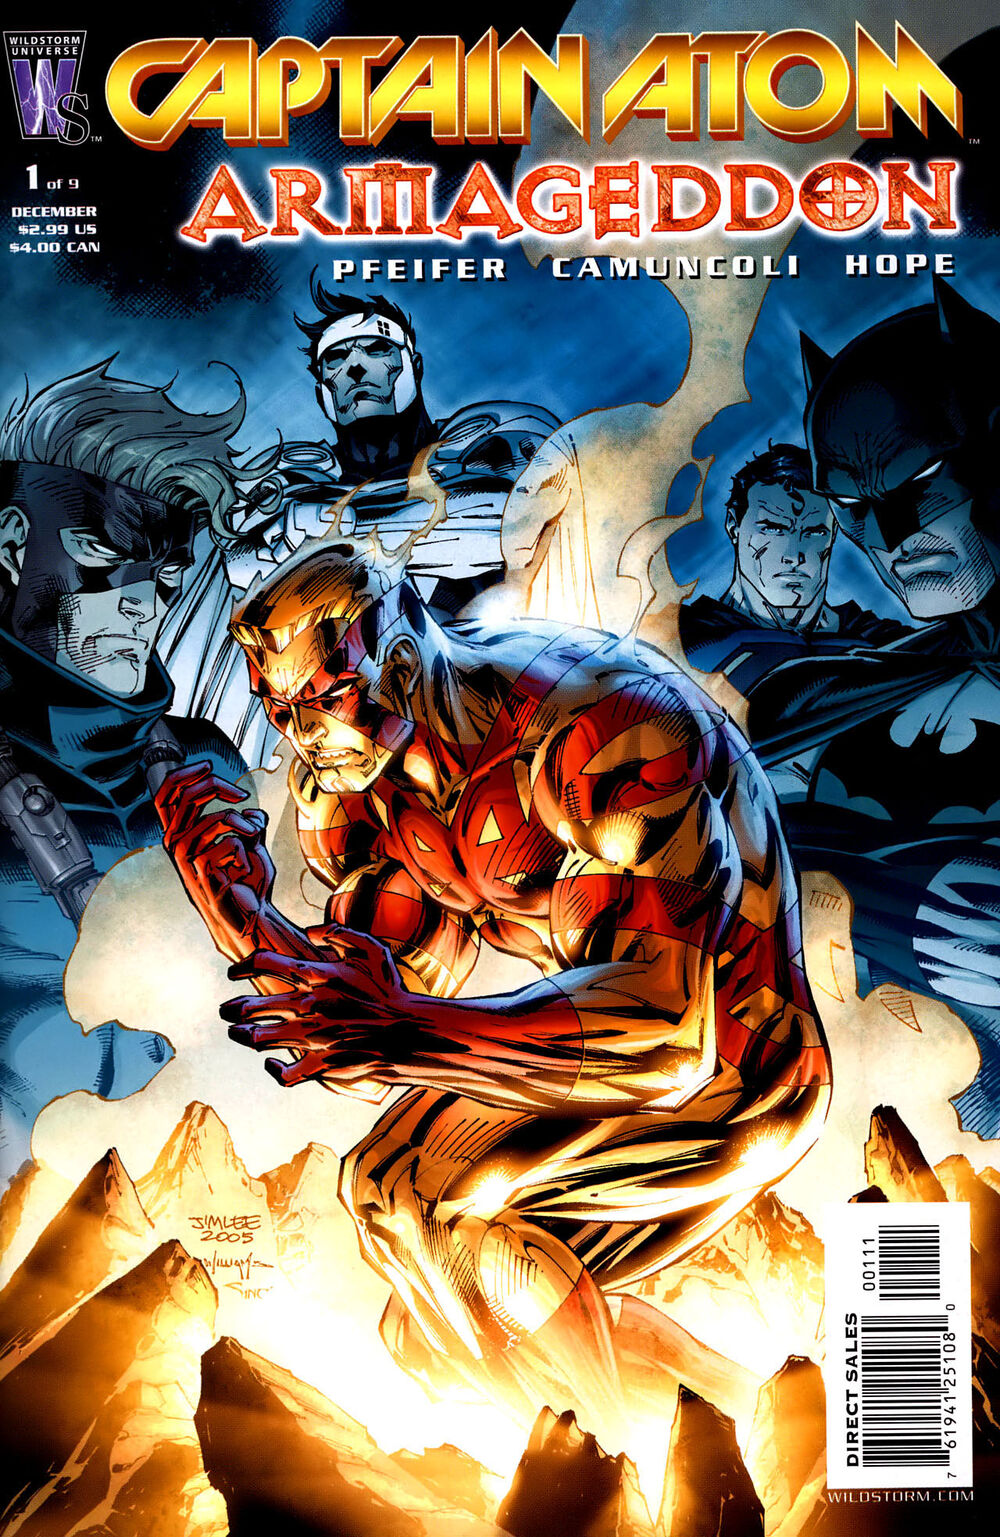 Captain Atom: Armageddon Limited Series Bundle Issues 1-9